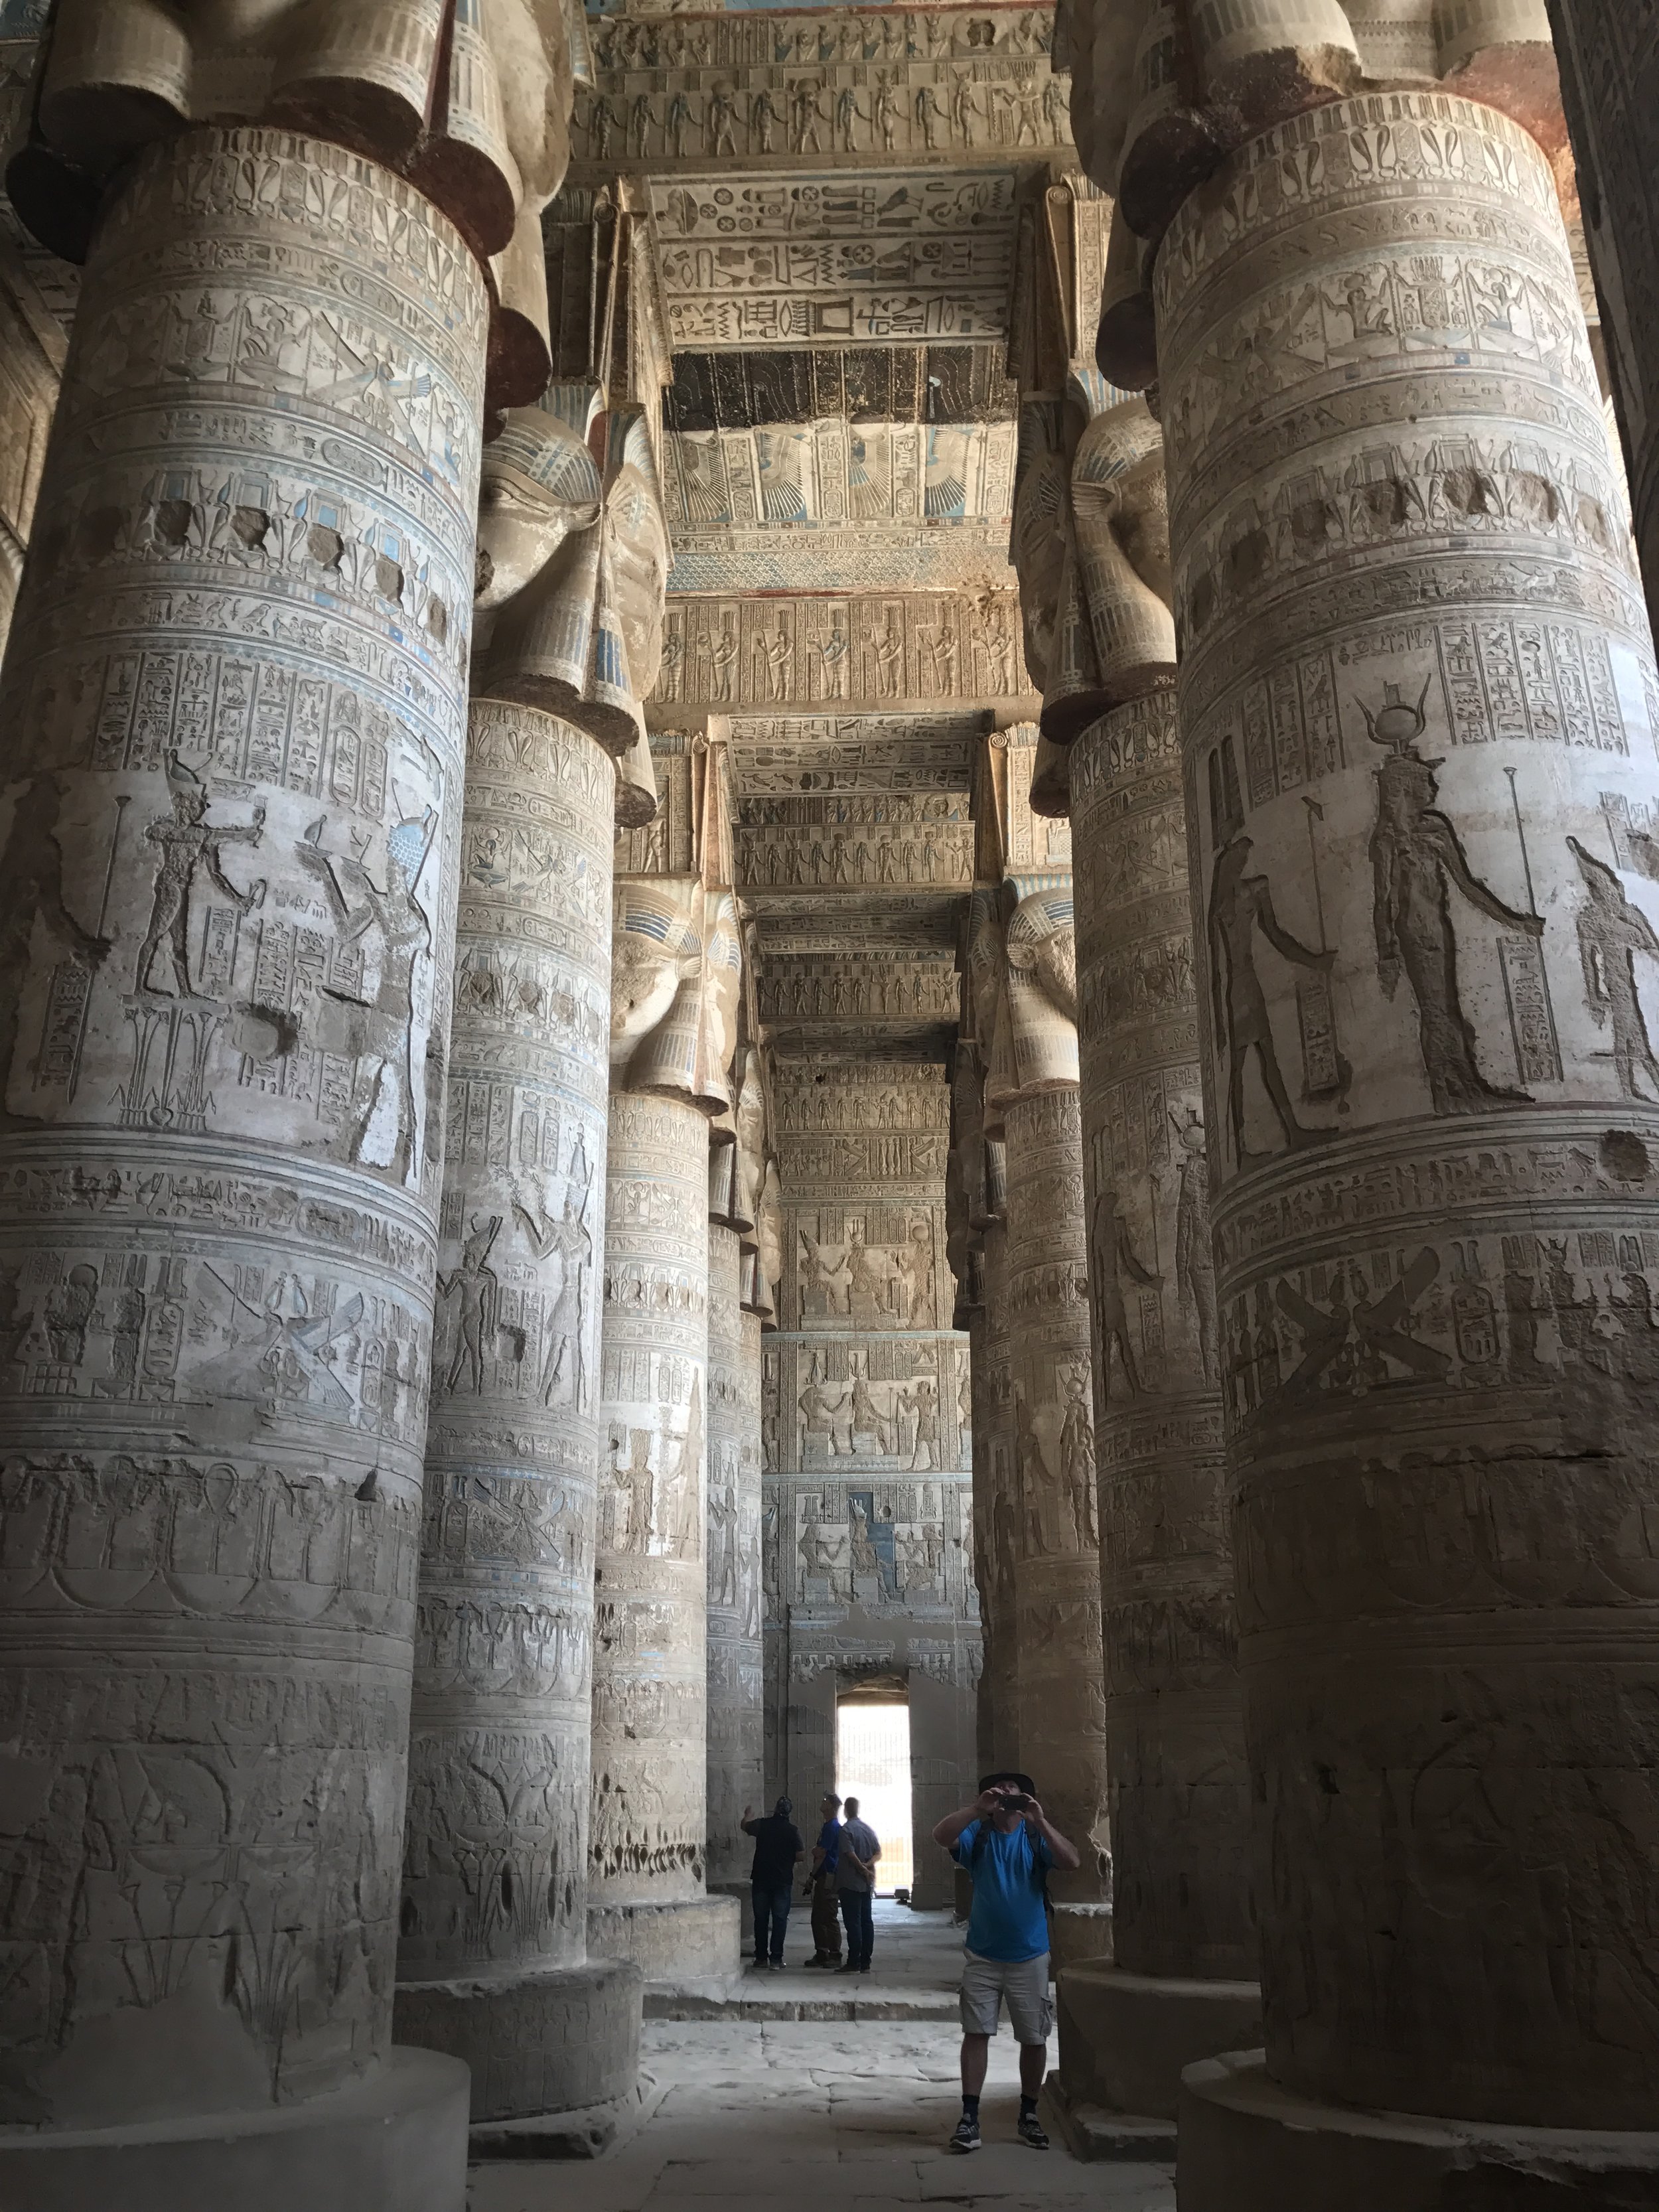 Within Hathor's Temple ( by Erika Mermuse)